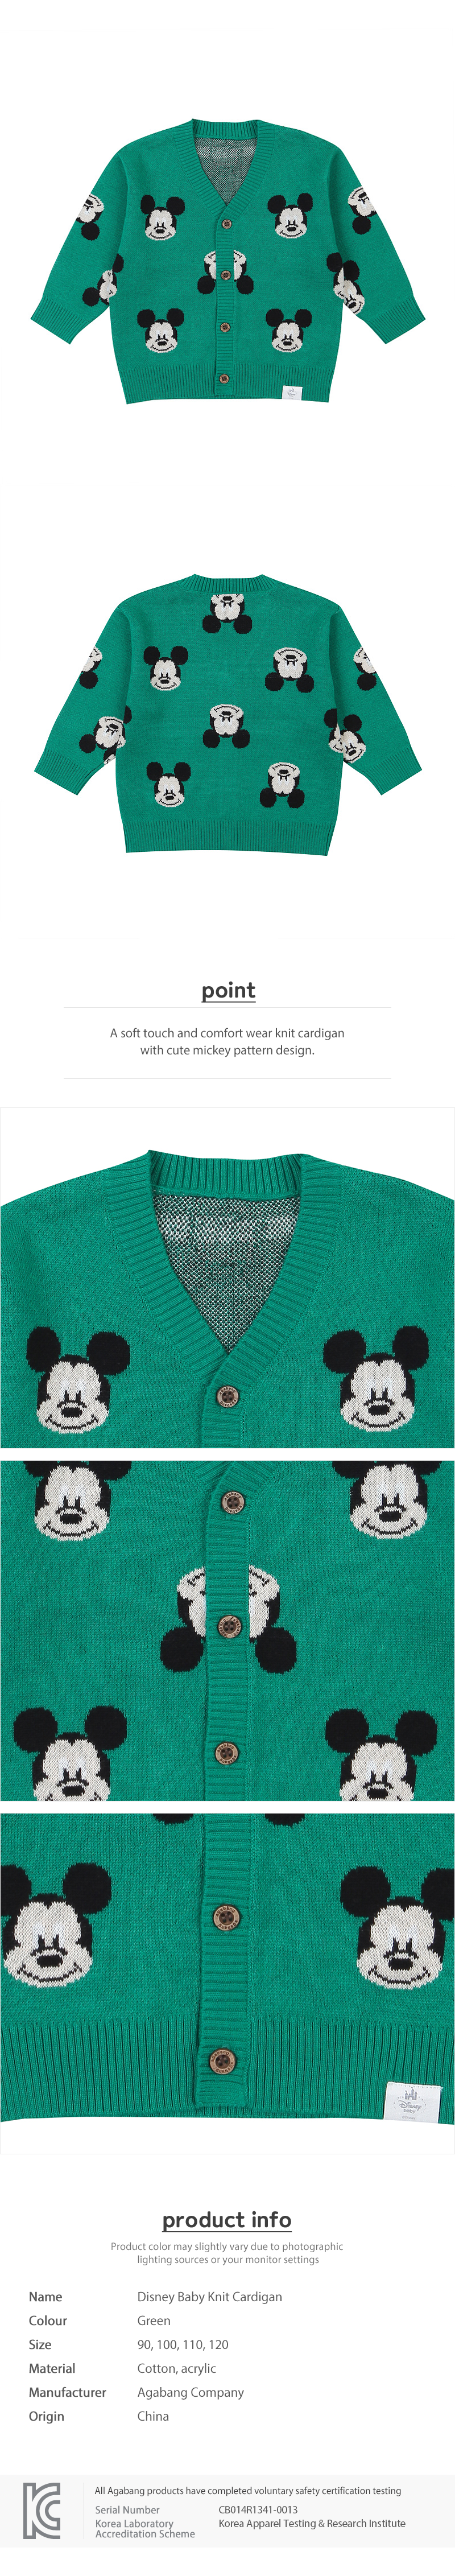 Disney baby knit cardigan green